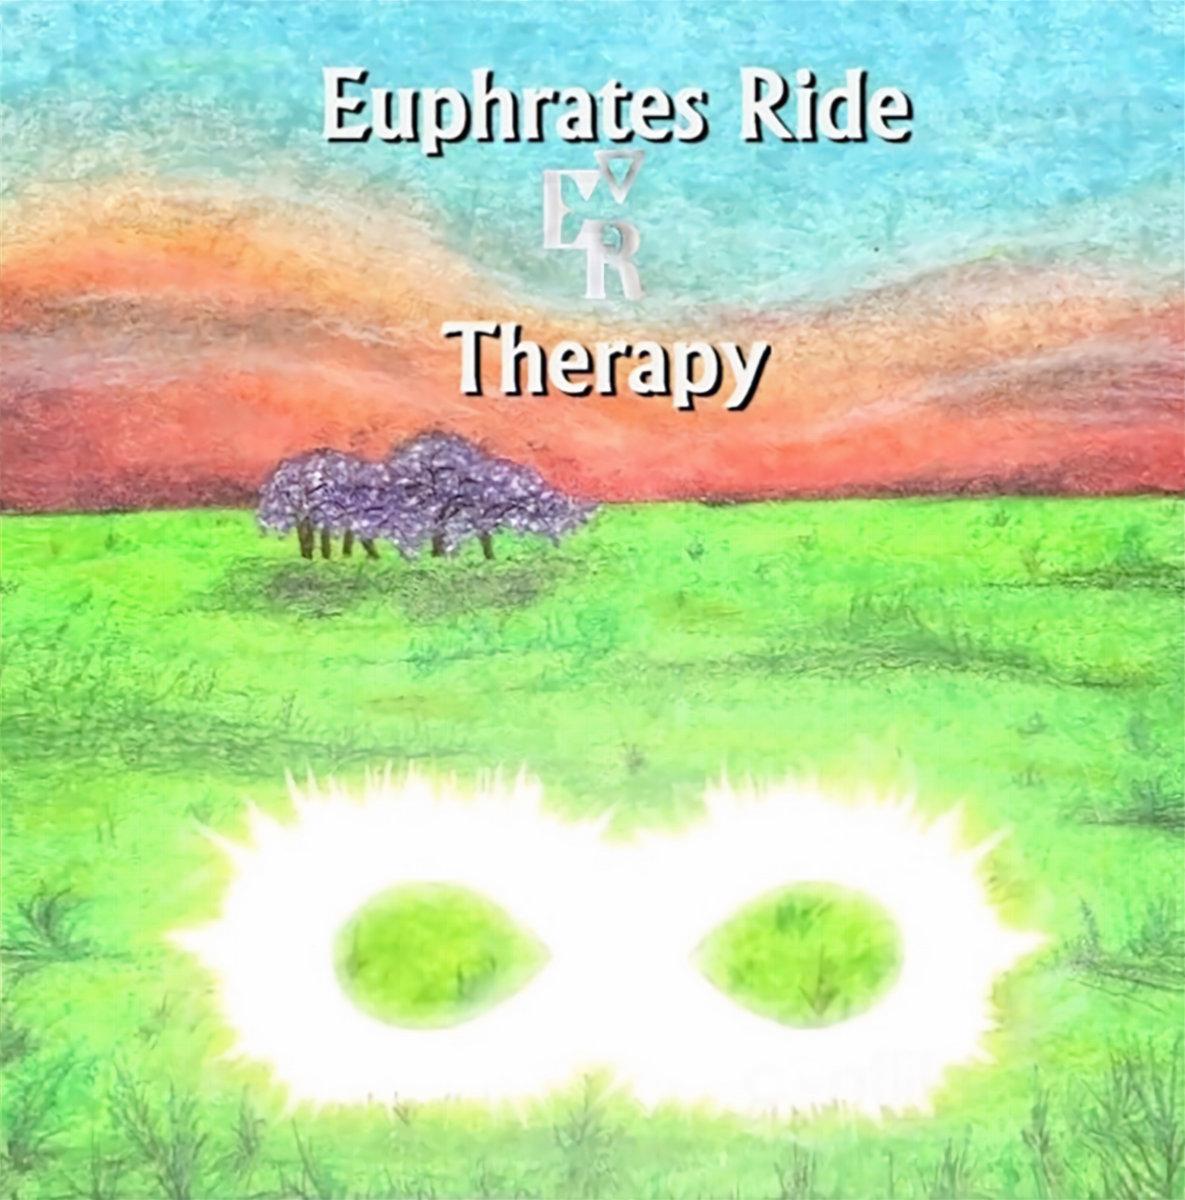 Euphrates ride artwork